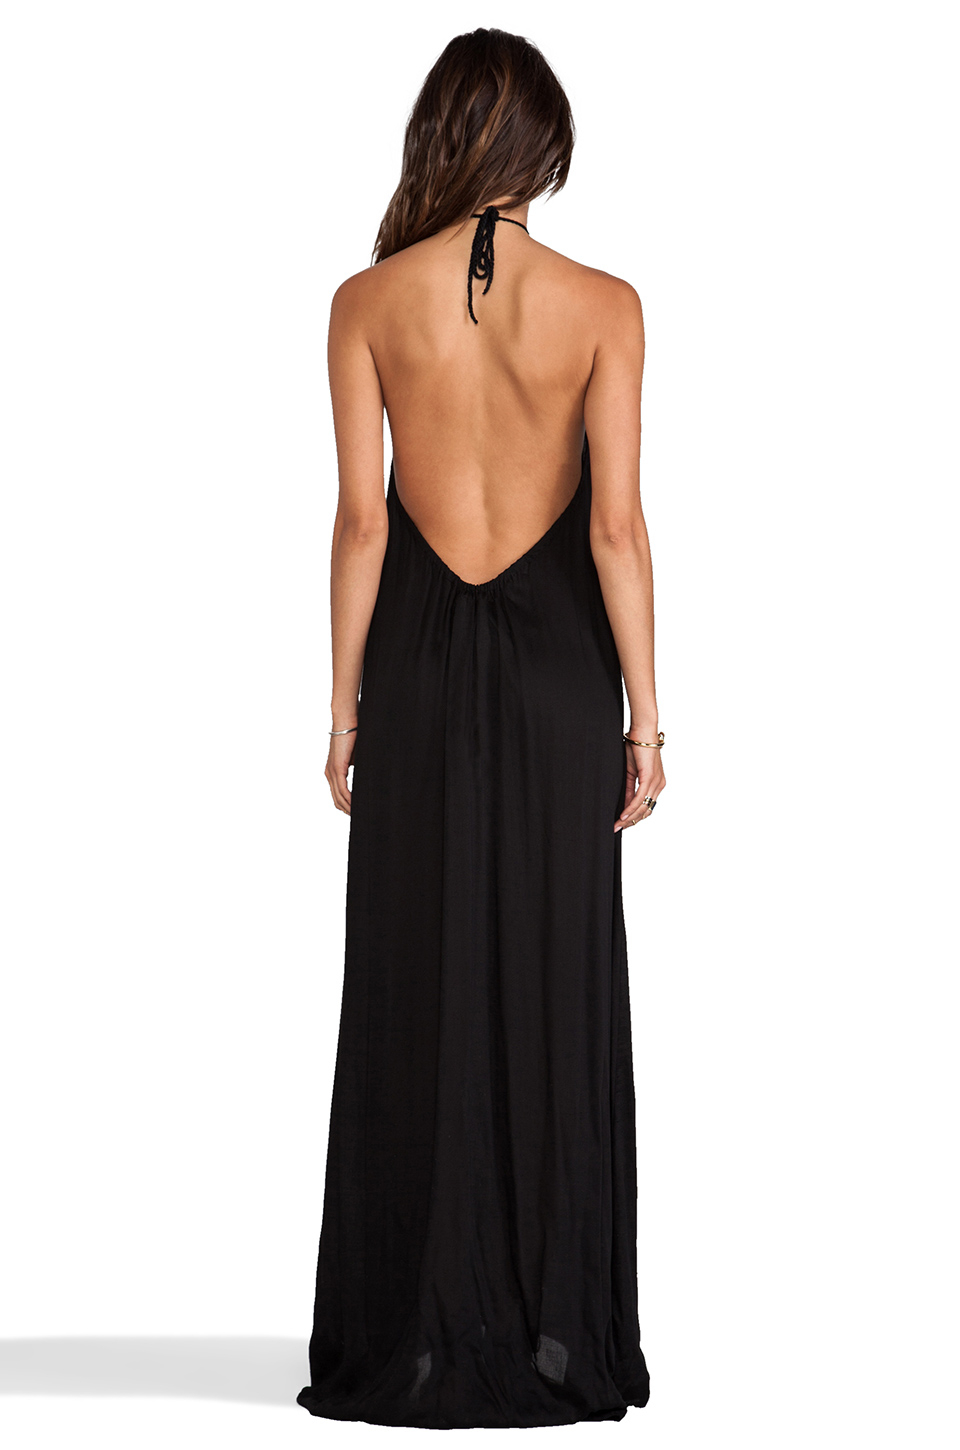 Acacia Swimwear Positano Crochet Maxi Dress in Black - Lyst